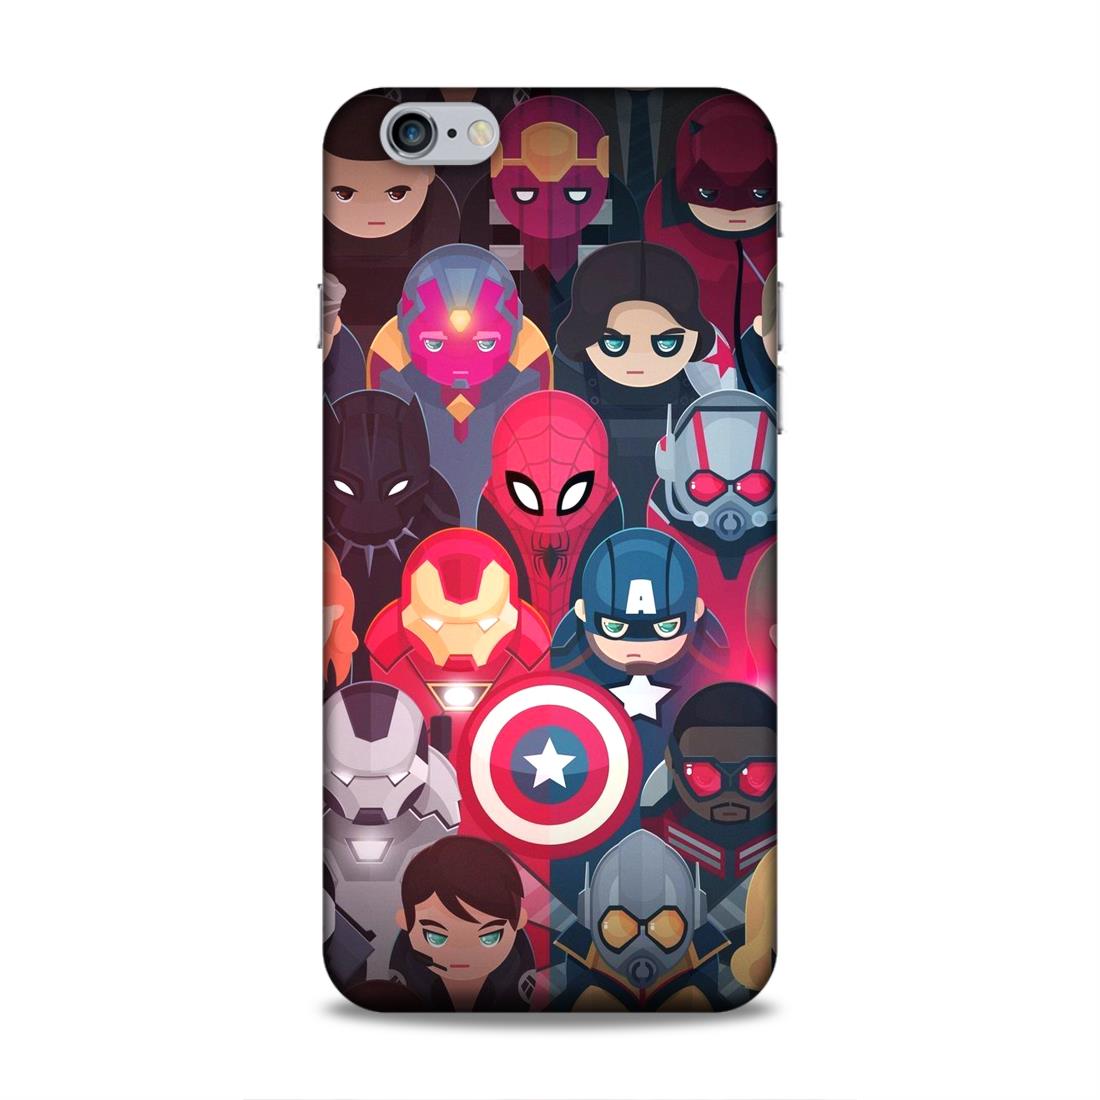 Avenger Heroes Hard Back Case For Apple iPhone 6 Plus / 6s Plus